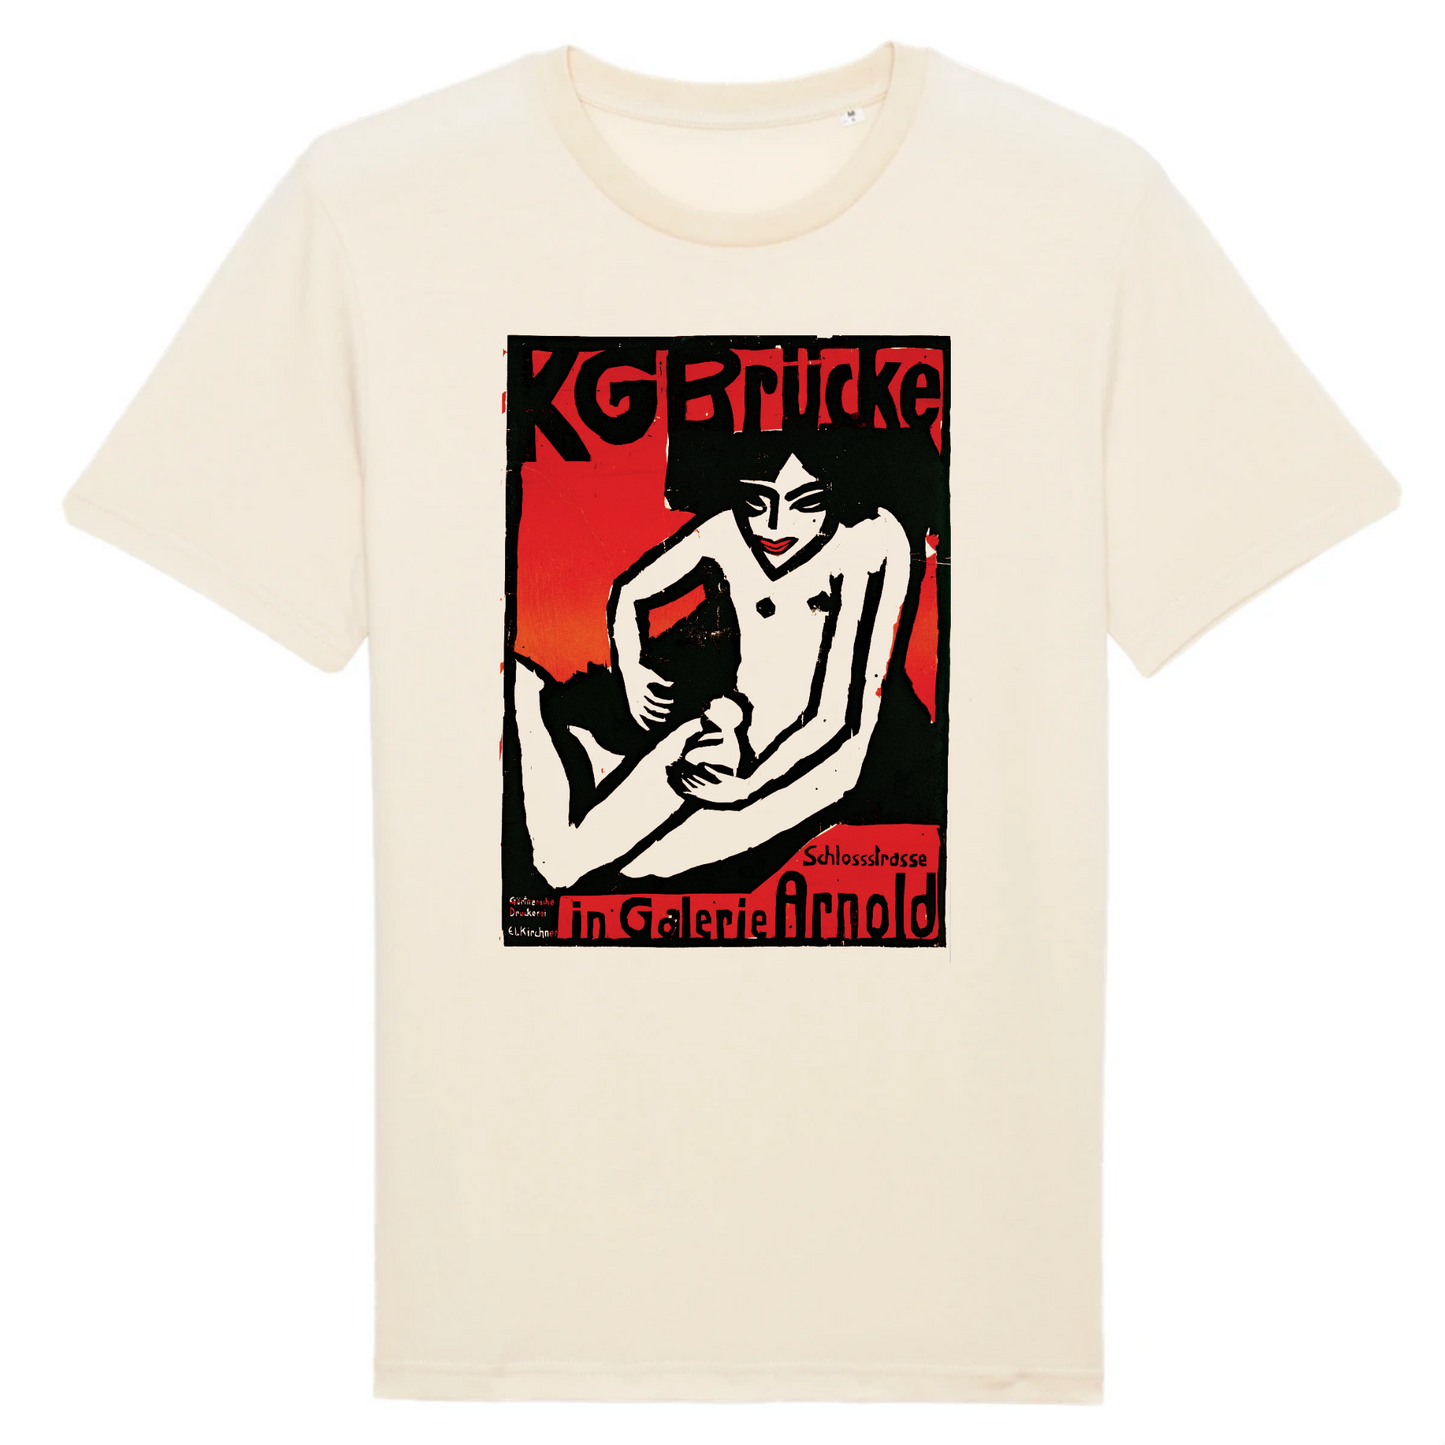 Die Brucke de Ernst Ludwig Kirchner - Camiseta de algodón orgánico